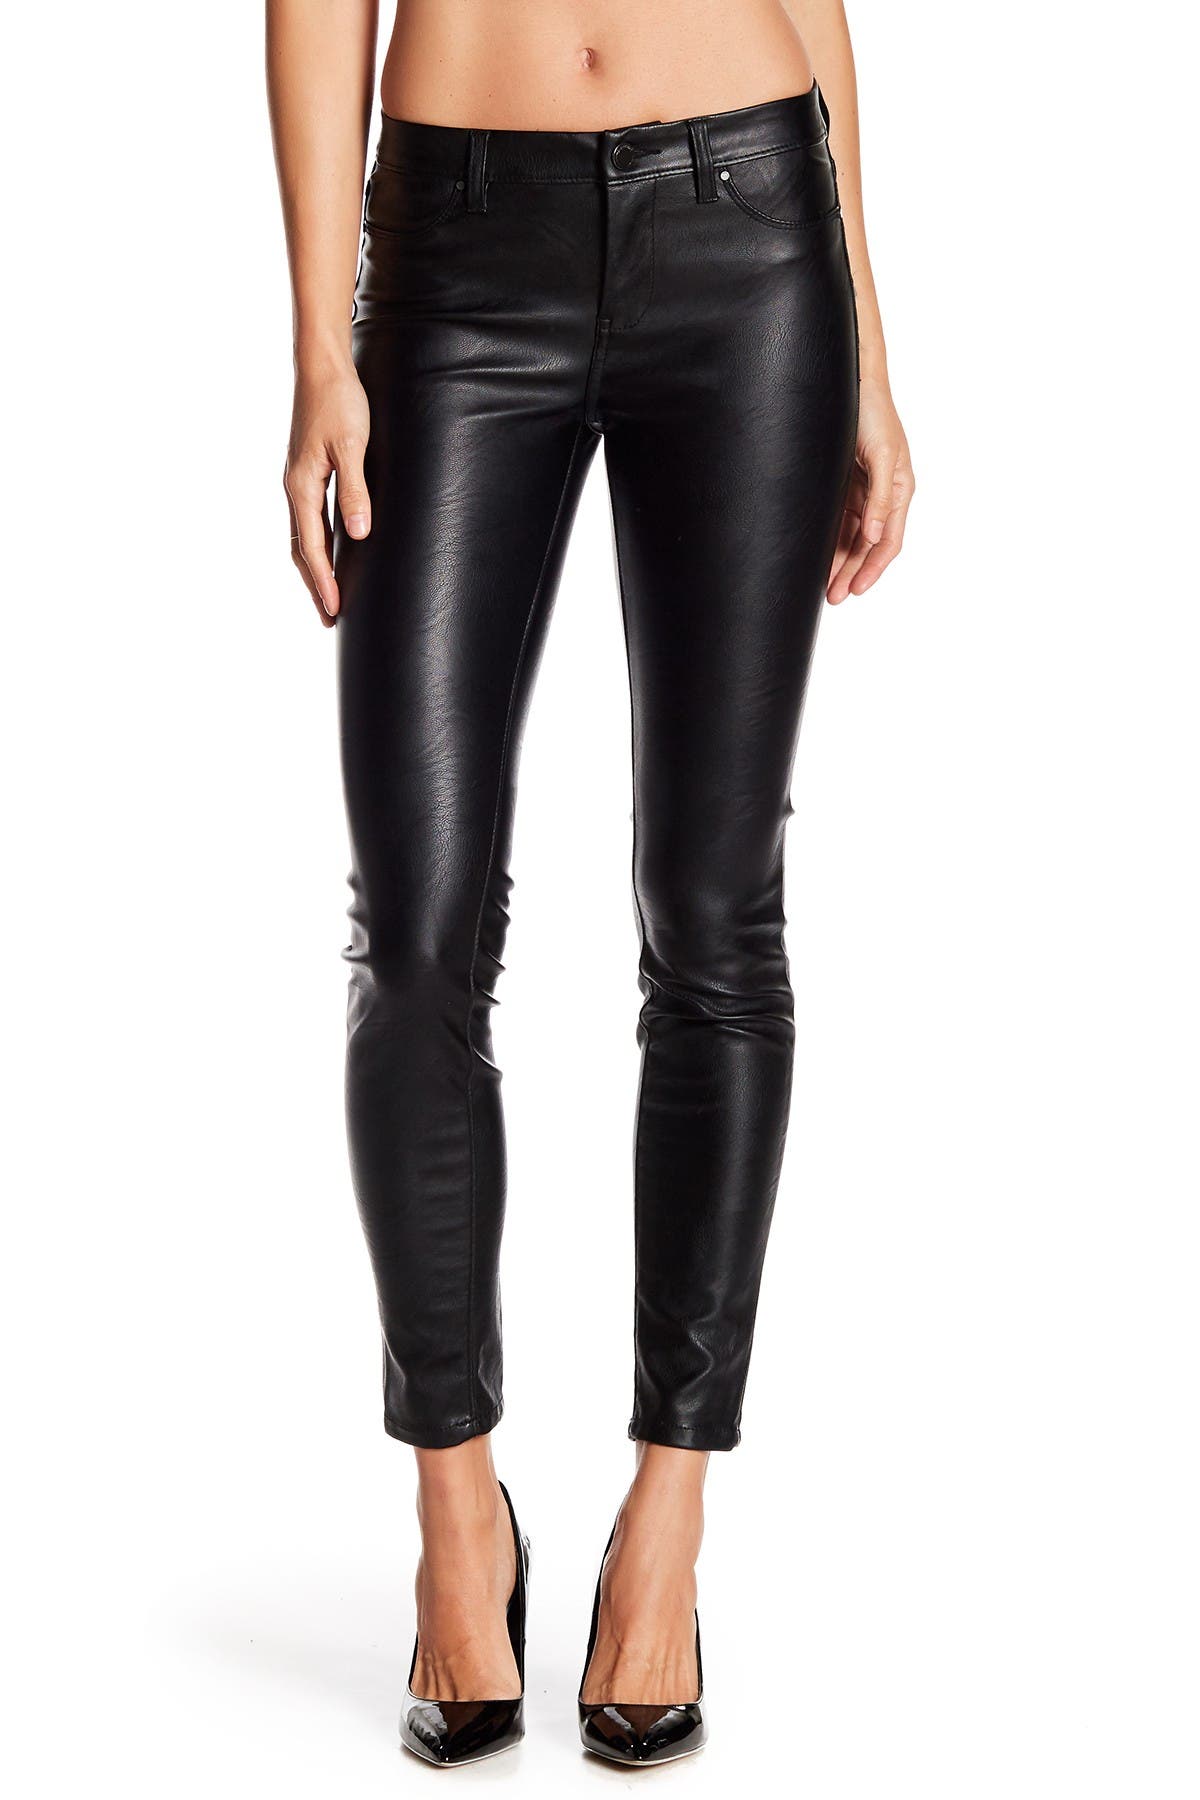 blanknyc denim vegan faux leather 5 pocket skinny jeans